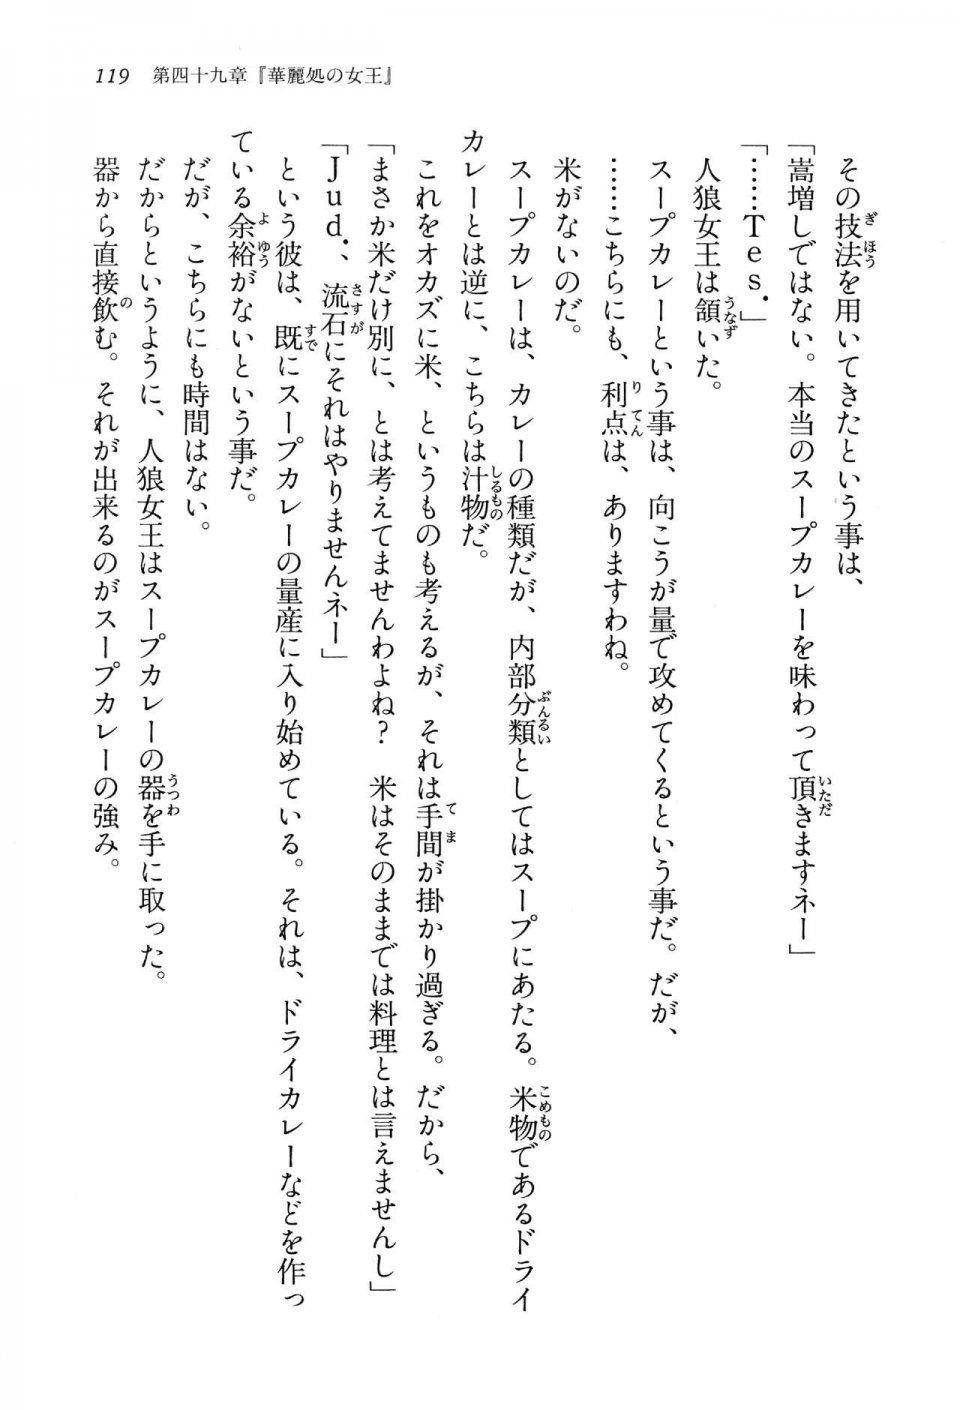 Kyoukai Senjou no Horizon LN Vol 15(6C) Part 1 - Photo #119